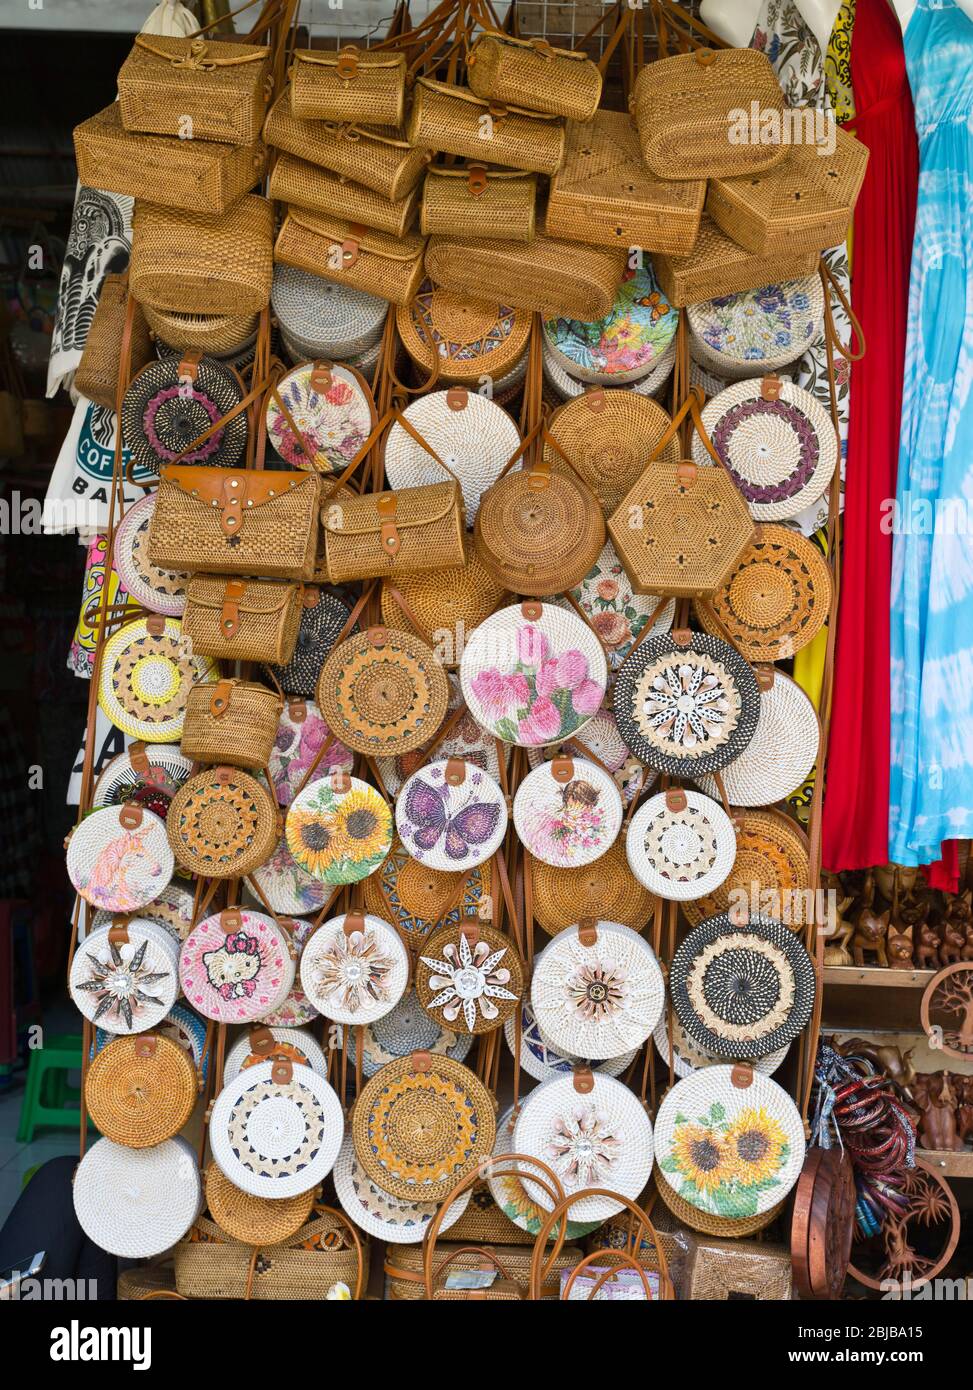 dh pasar Seni Guwang Sukawati BALI INDONESIA bolsos tejidos artesanales mercado de artesanía balinesa bolsos artesanales Foto de stock